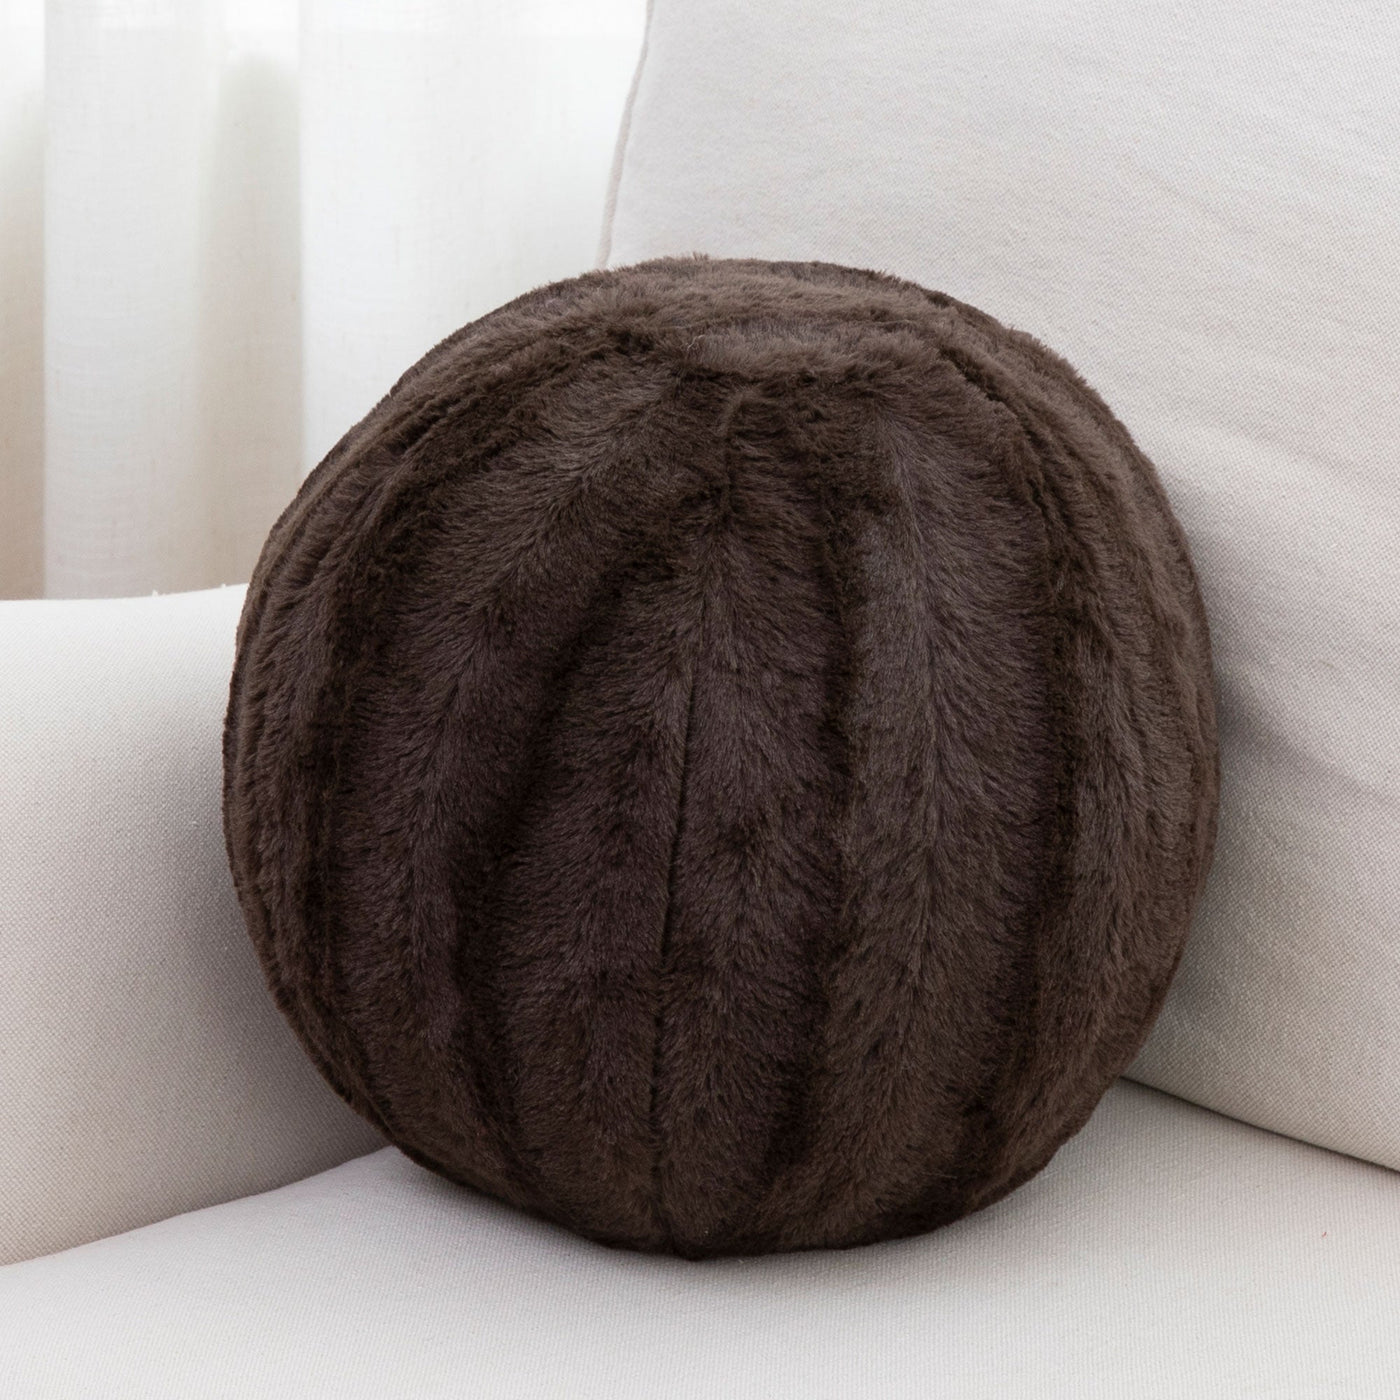 Cheer Collection Ball Throw Pillows for Living Room Decor, Decorative